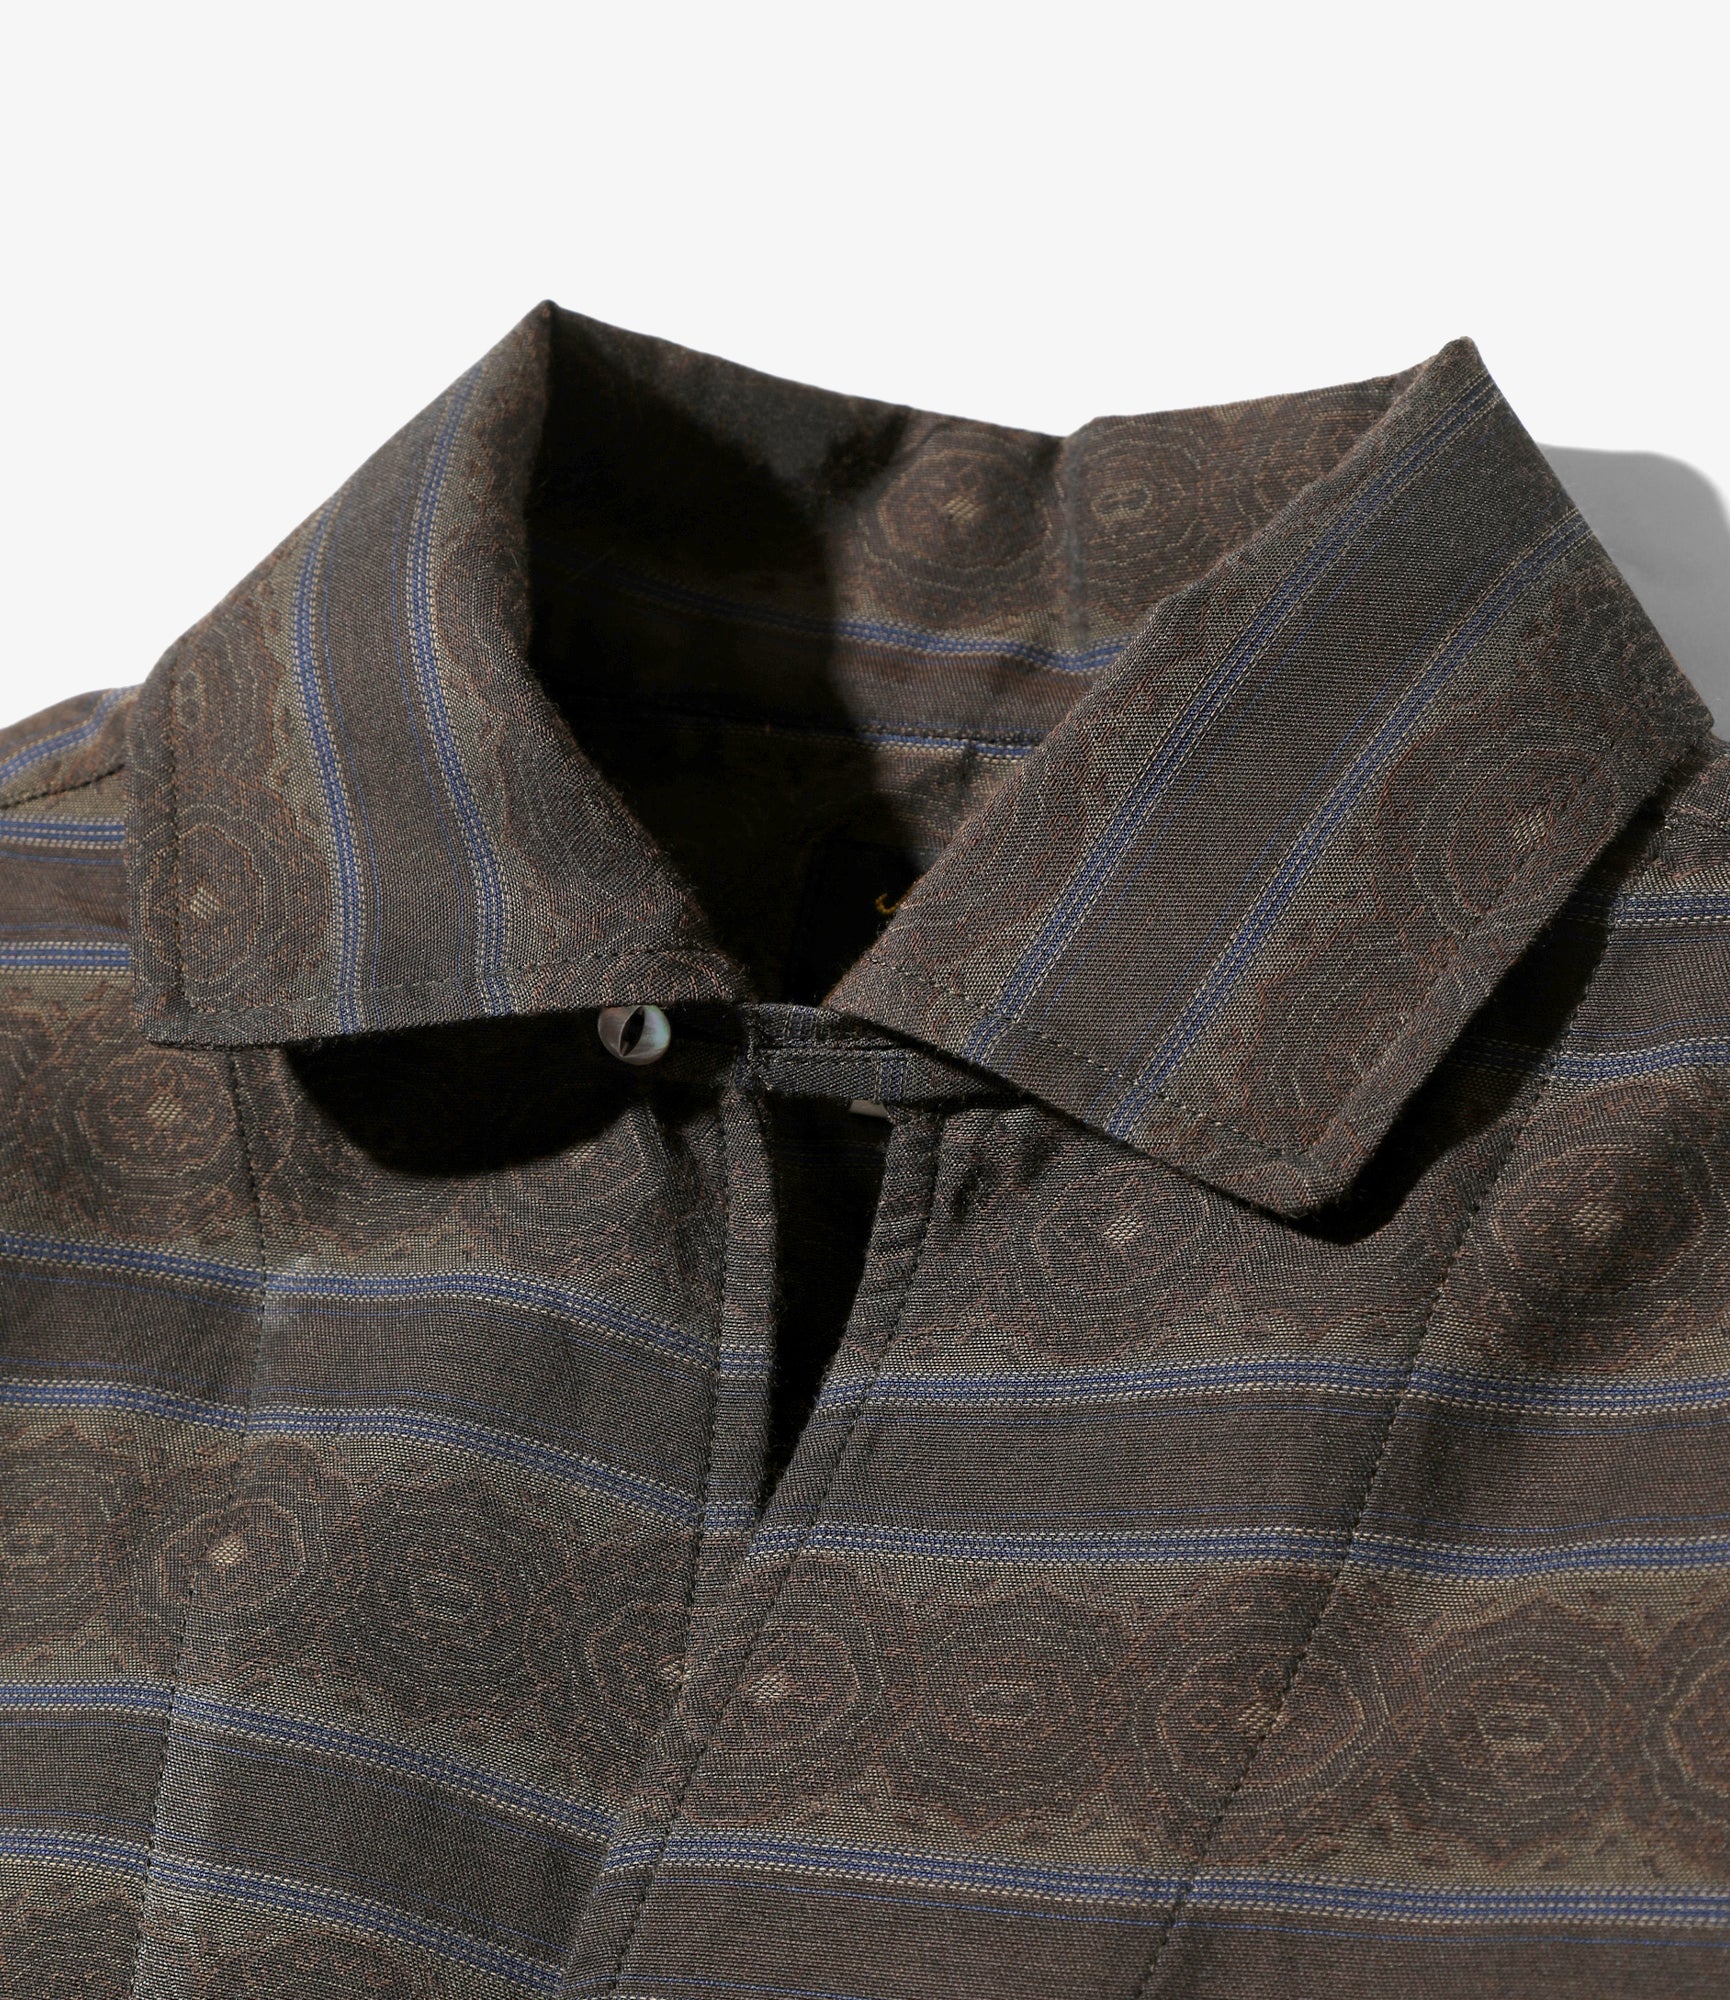 Needles S/S Italian Collar Shirt - PE/C Fine Pattern Stripe Jq - Brown